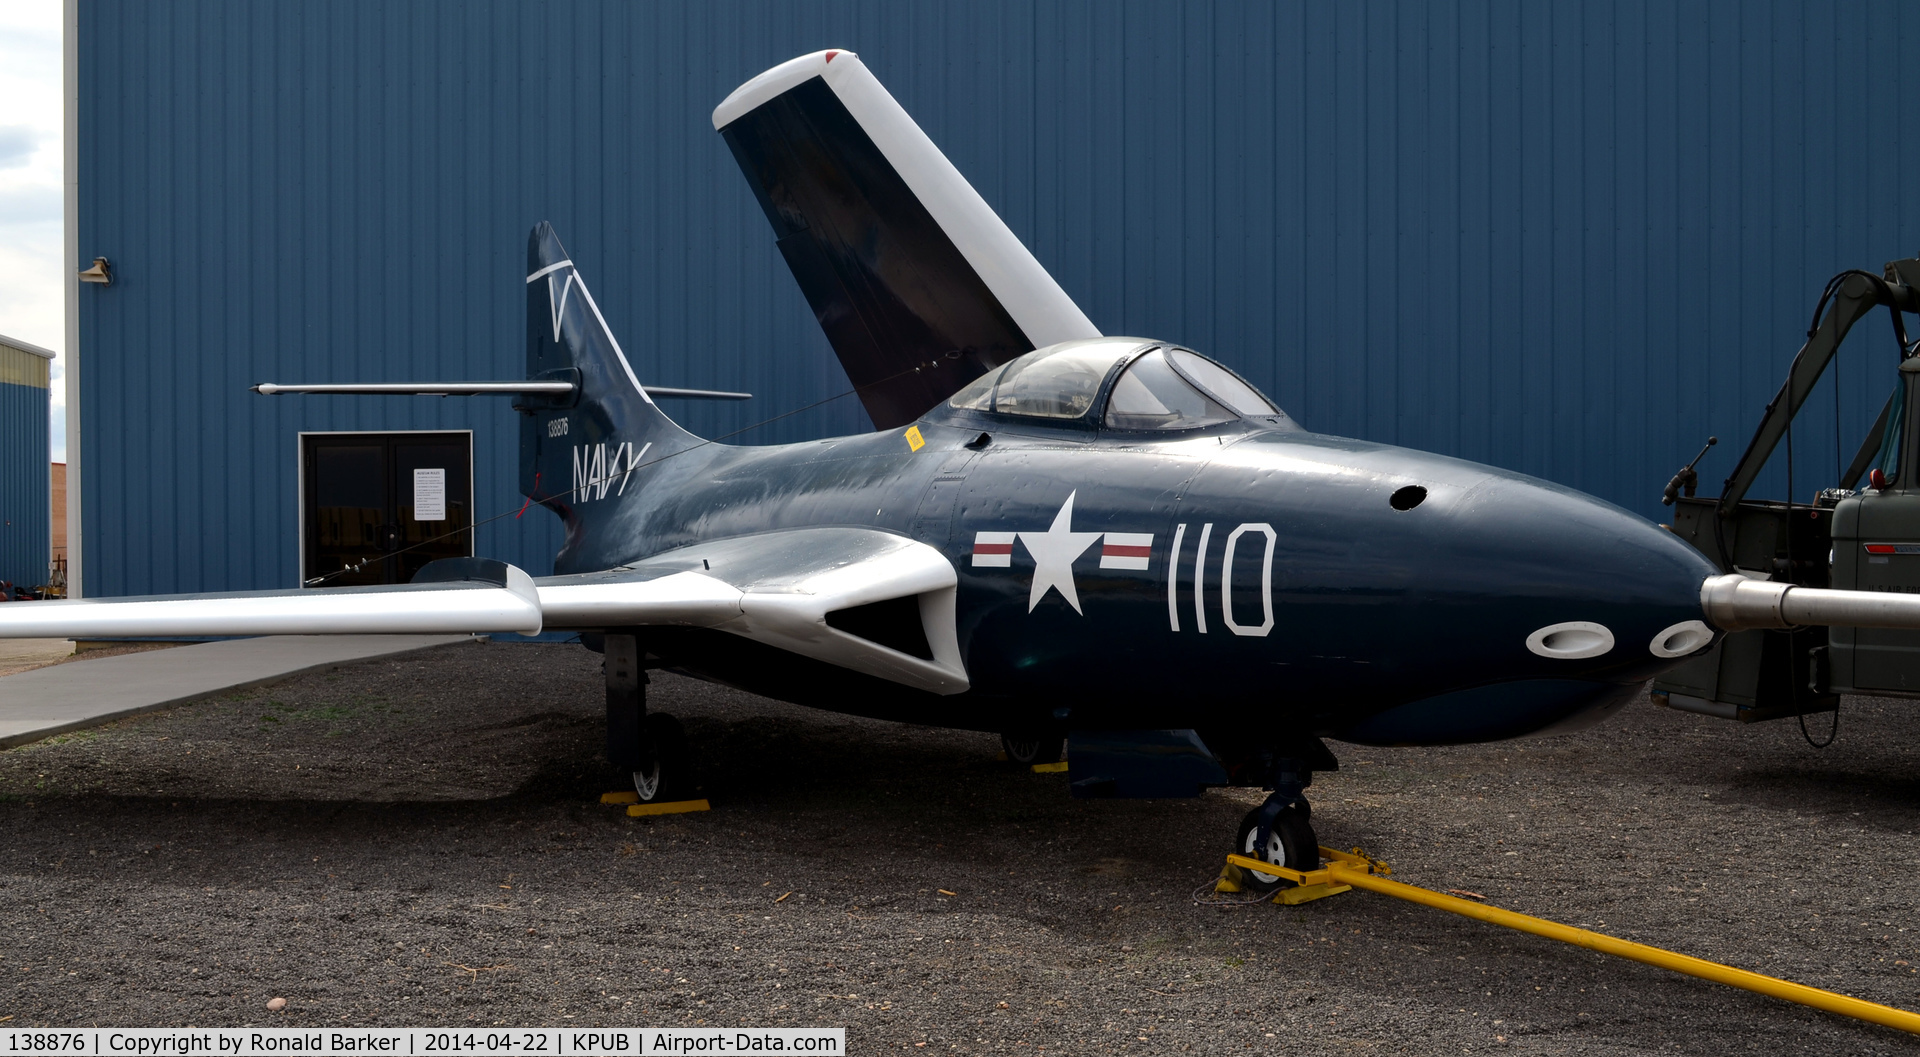 138876, Grumman F9F-6 Cougar C/N Not found 138876, Weisbrod Aircraft Museum